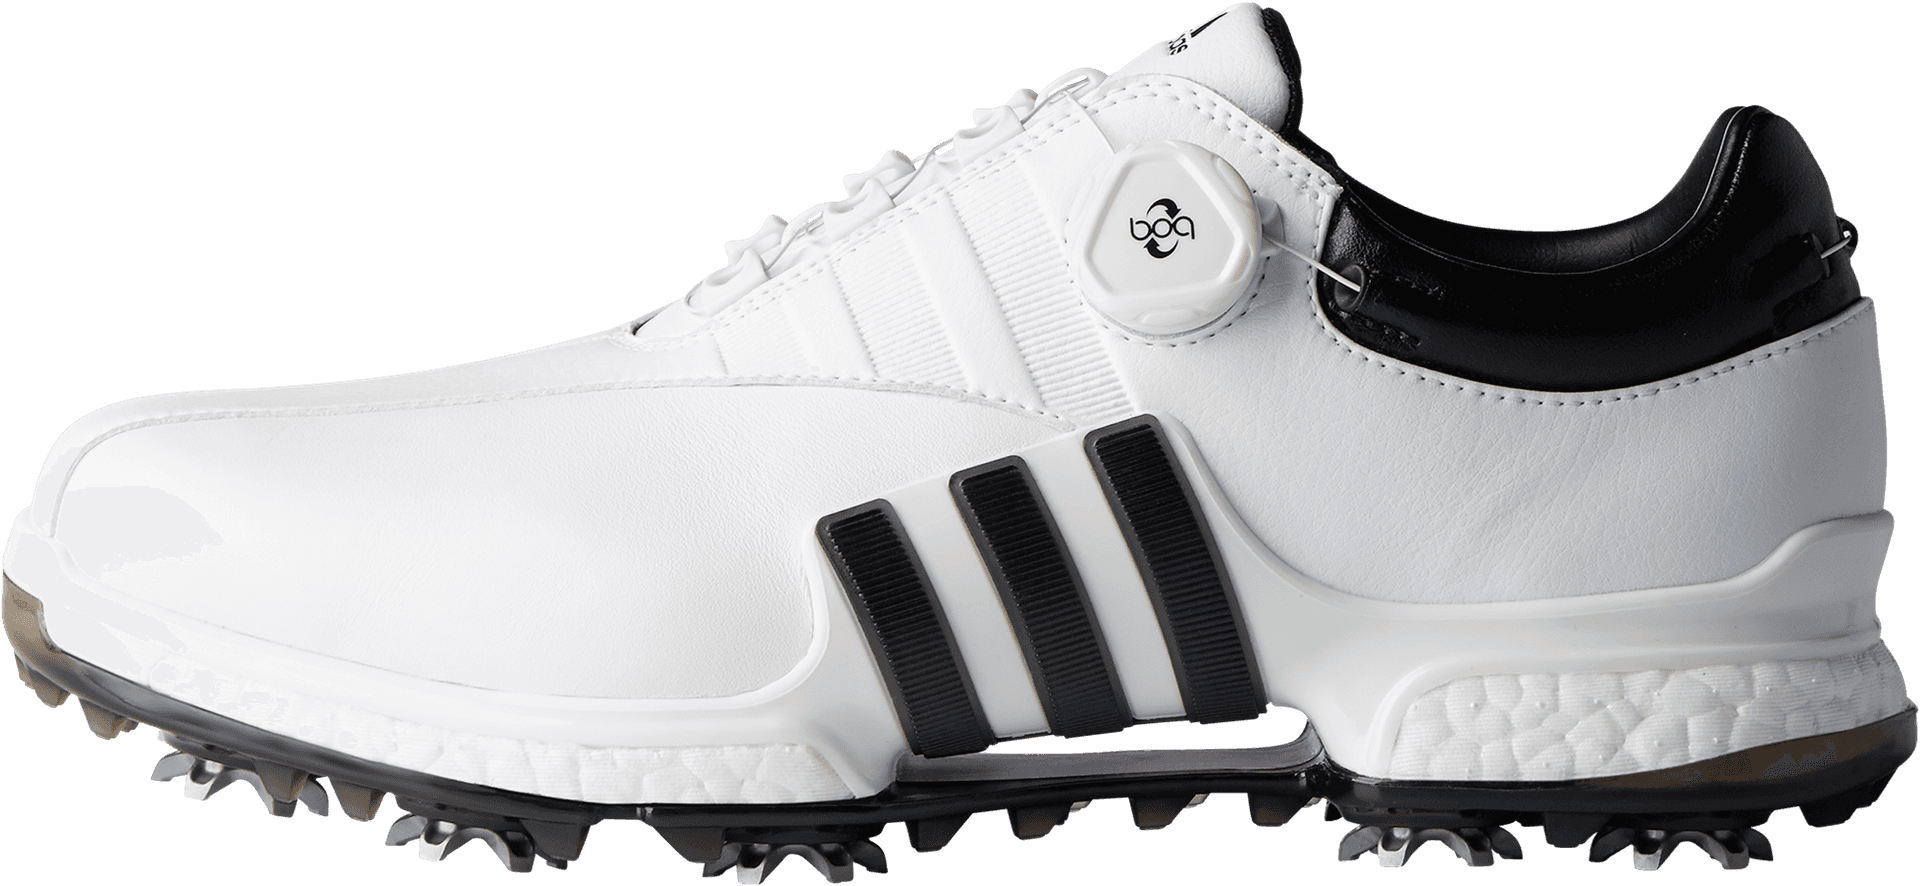 Adidas Golf Shoes White Black Design PNG